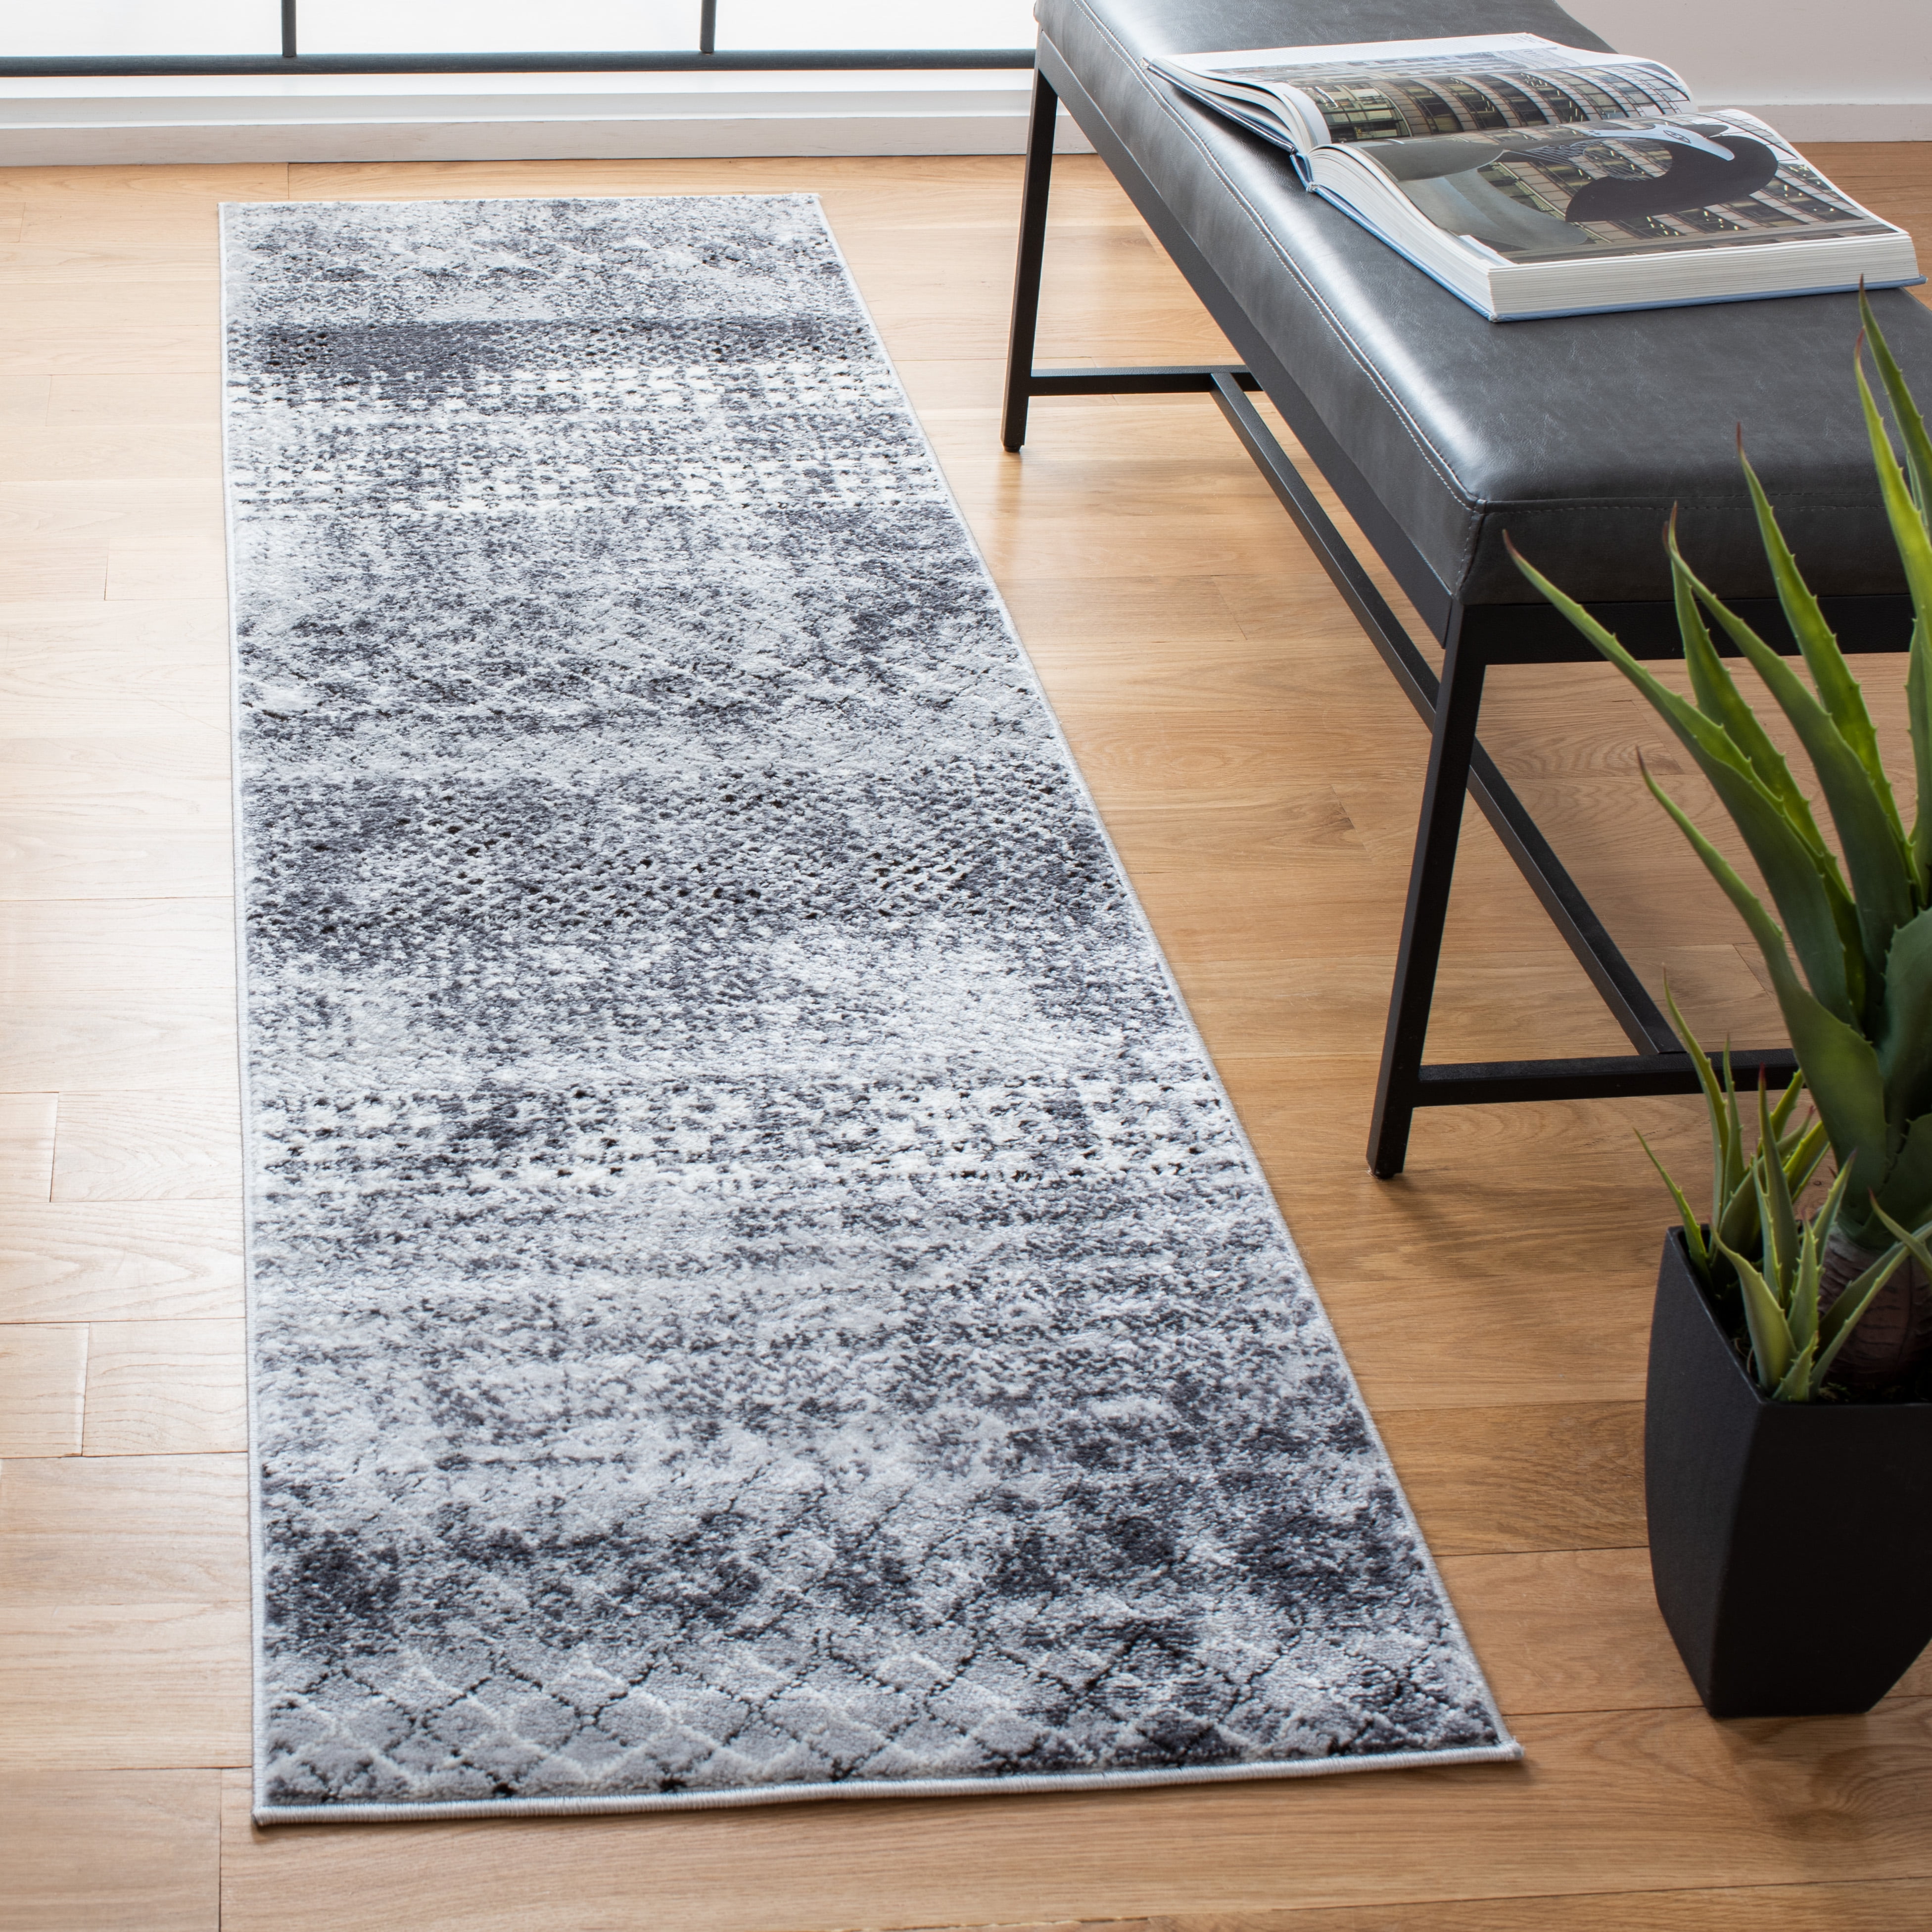 Details about   Area Floor Rugs Kitchen Runner Rug Mat Carpet Kitchen Decor 20"X59" Olive Green 